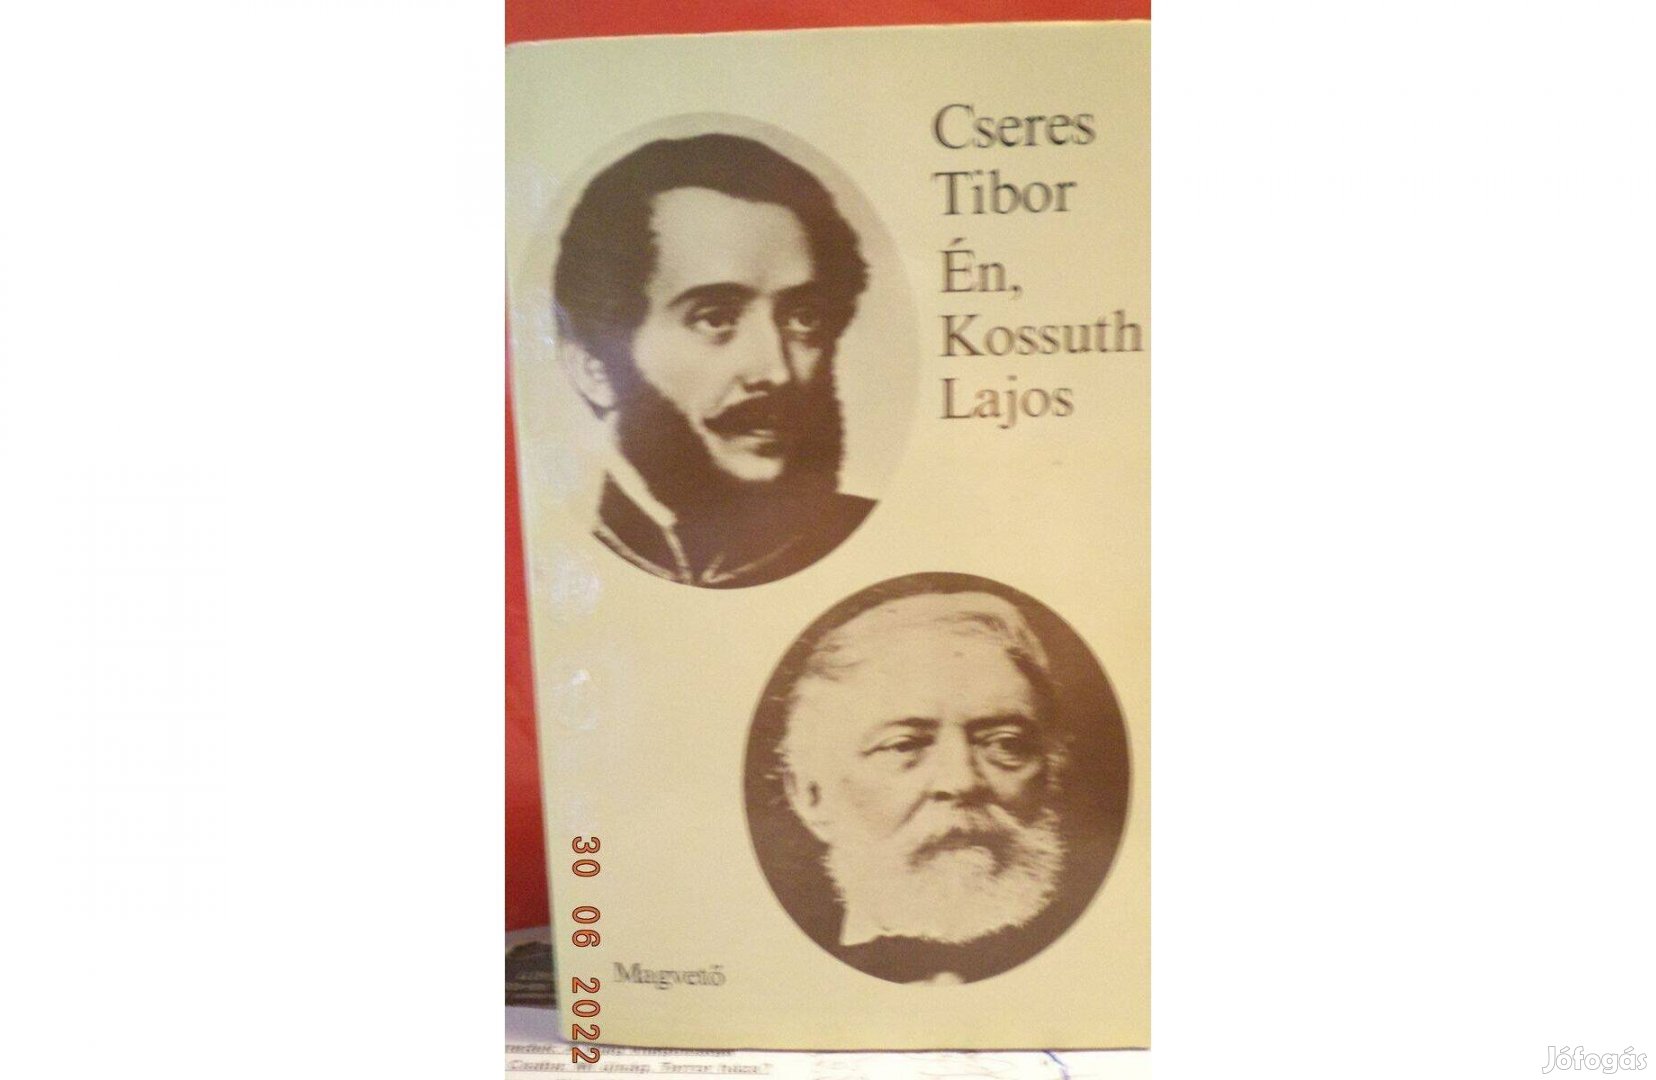 Cseres Tibor: Én, Kossuth Lajos